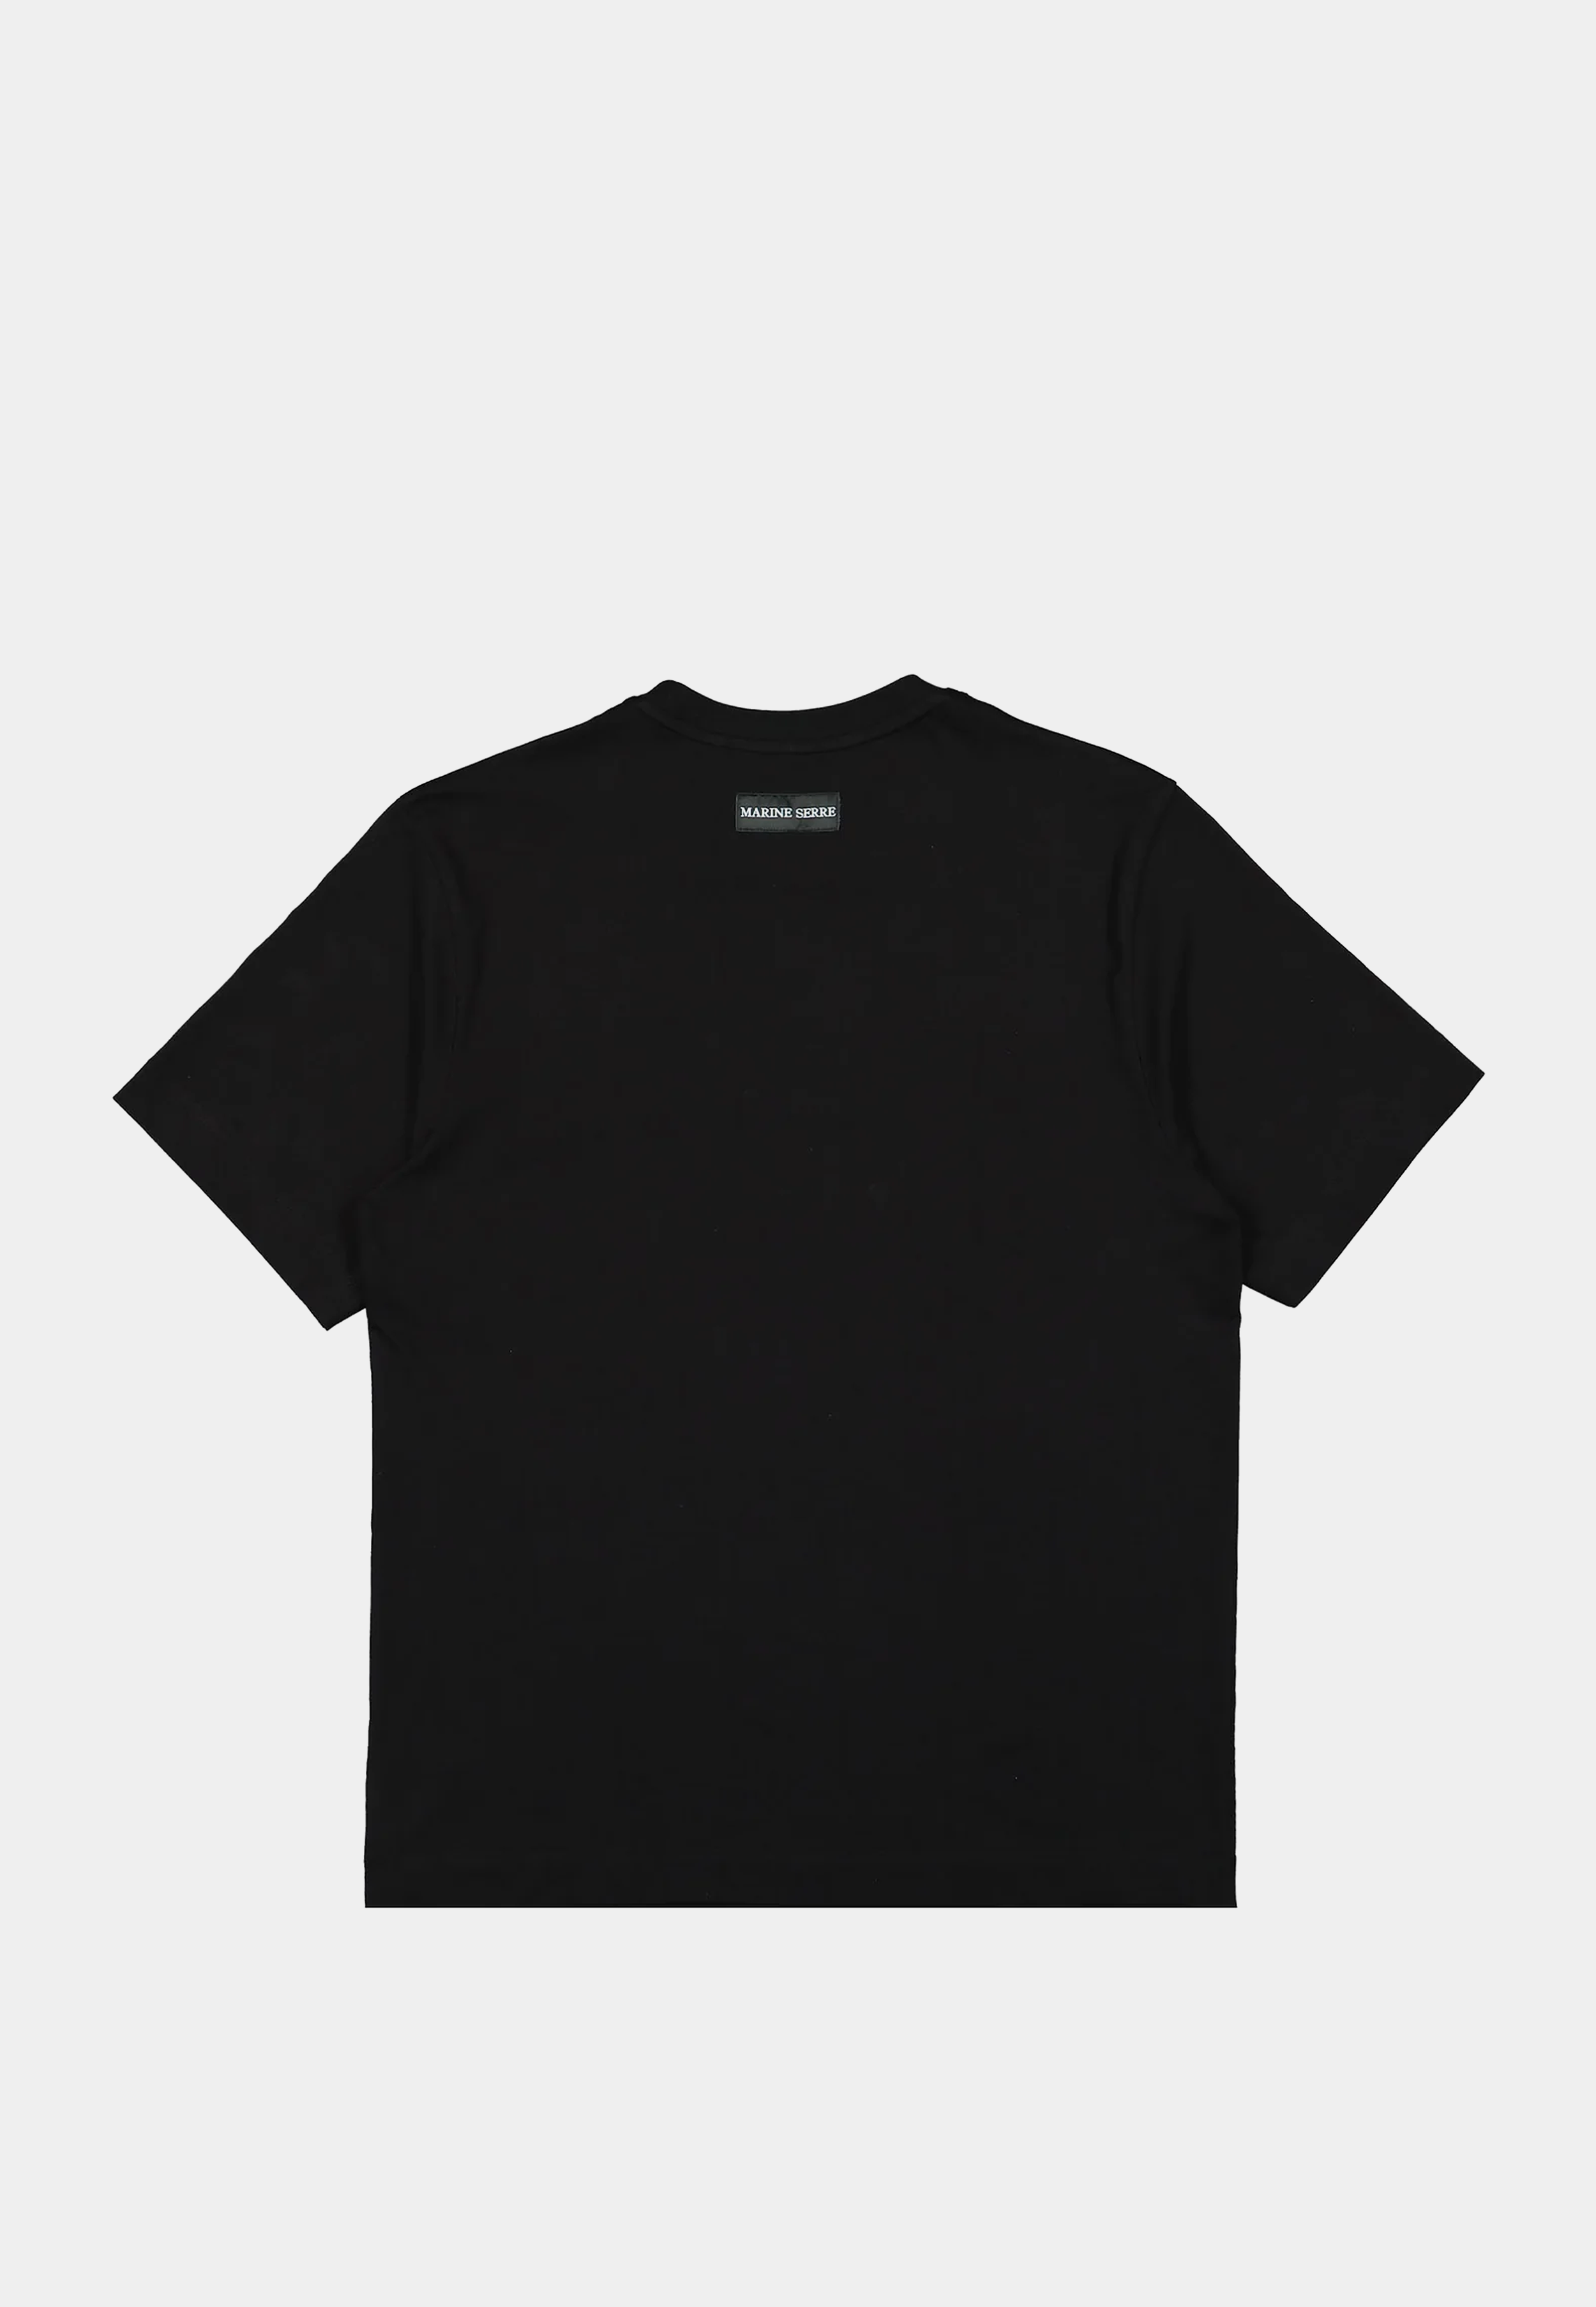 Marine Serre Organic Cotton Jersey Plain T-Shirt 1454-Bk99 Black